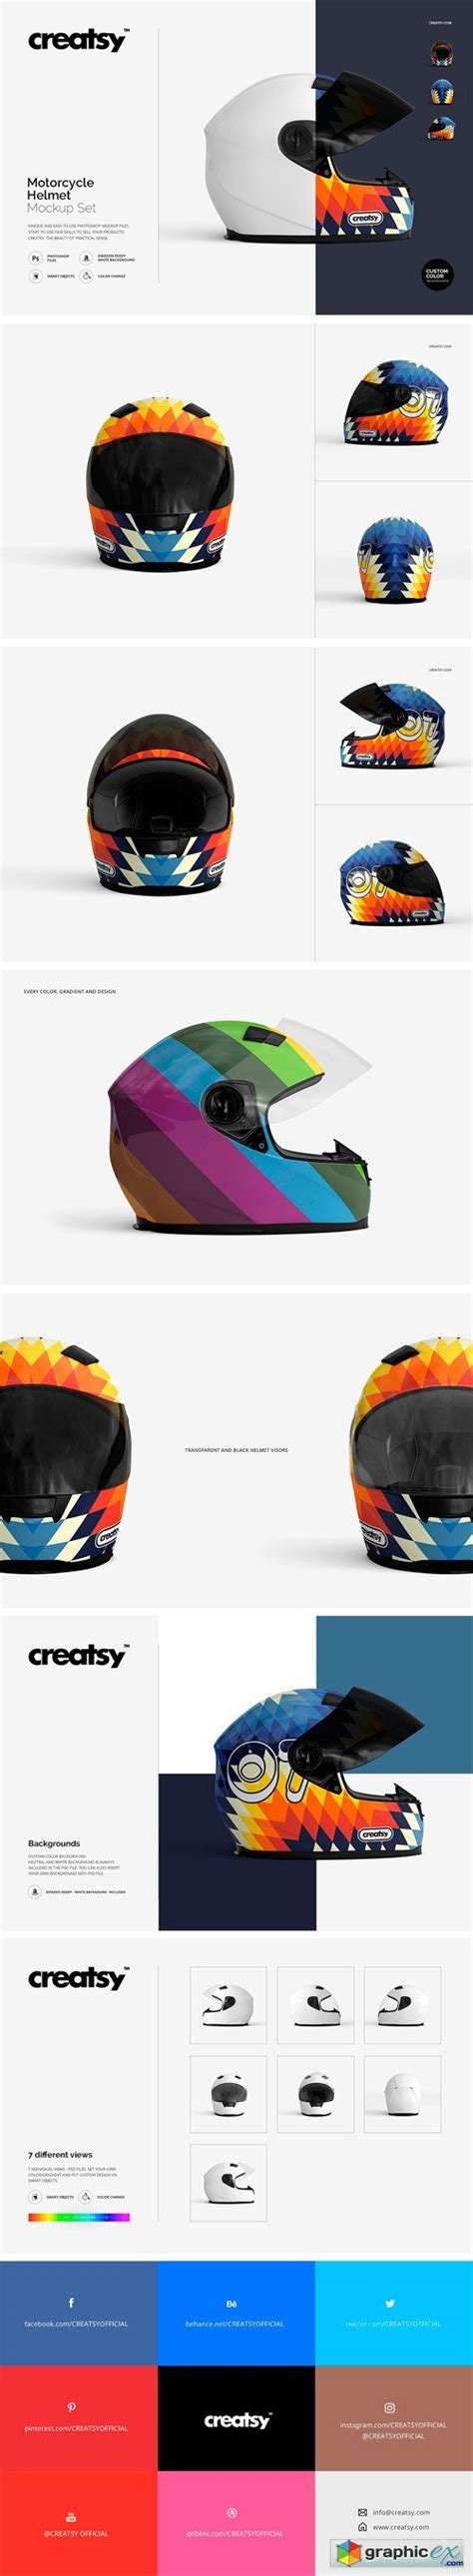 motorcycle helmet mockup set   vector stock image photoshop icon